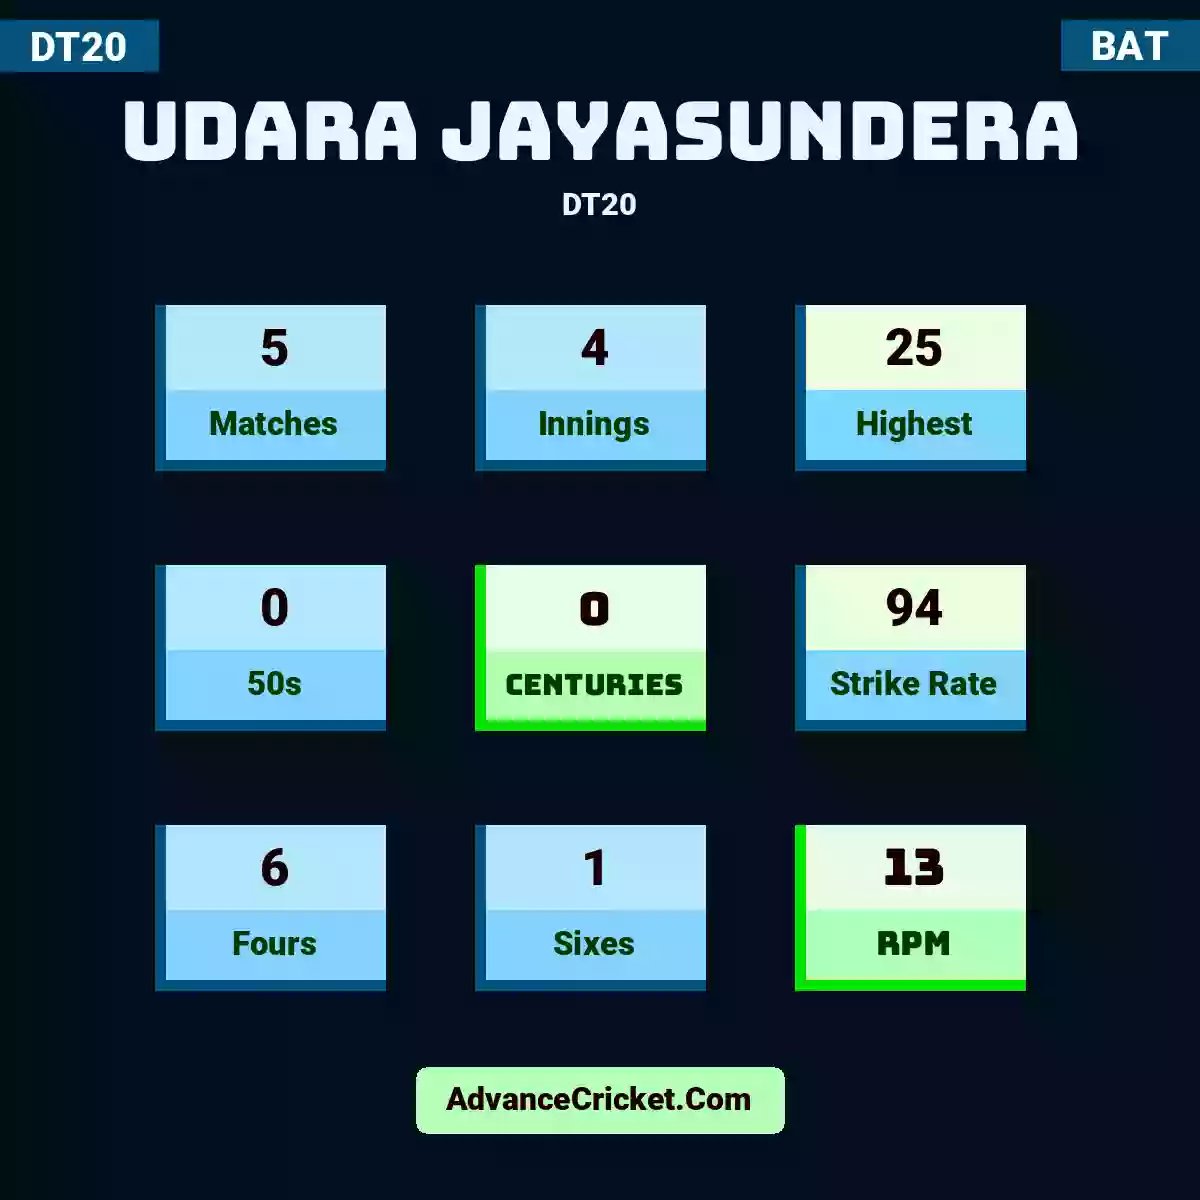 Udara Jayasundera DT20 , Udara Jayasundera played 5 matches, scored 25 runs as highest, 0 half-centuries, and 0 centuries, with a strike rate of 94. U.Jayasundera hit 6 fours and 1 sixes, with an RPM of 13.